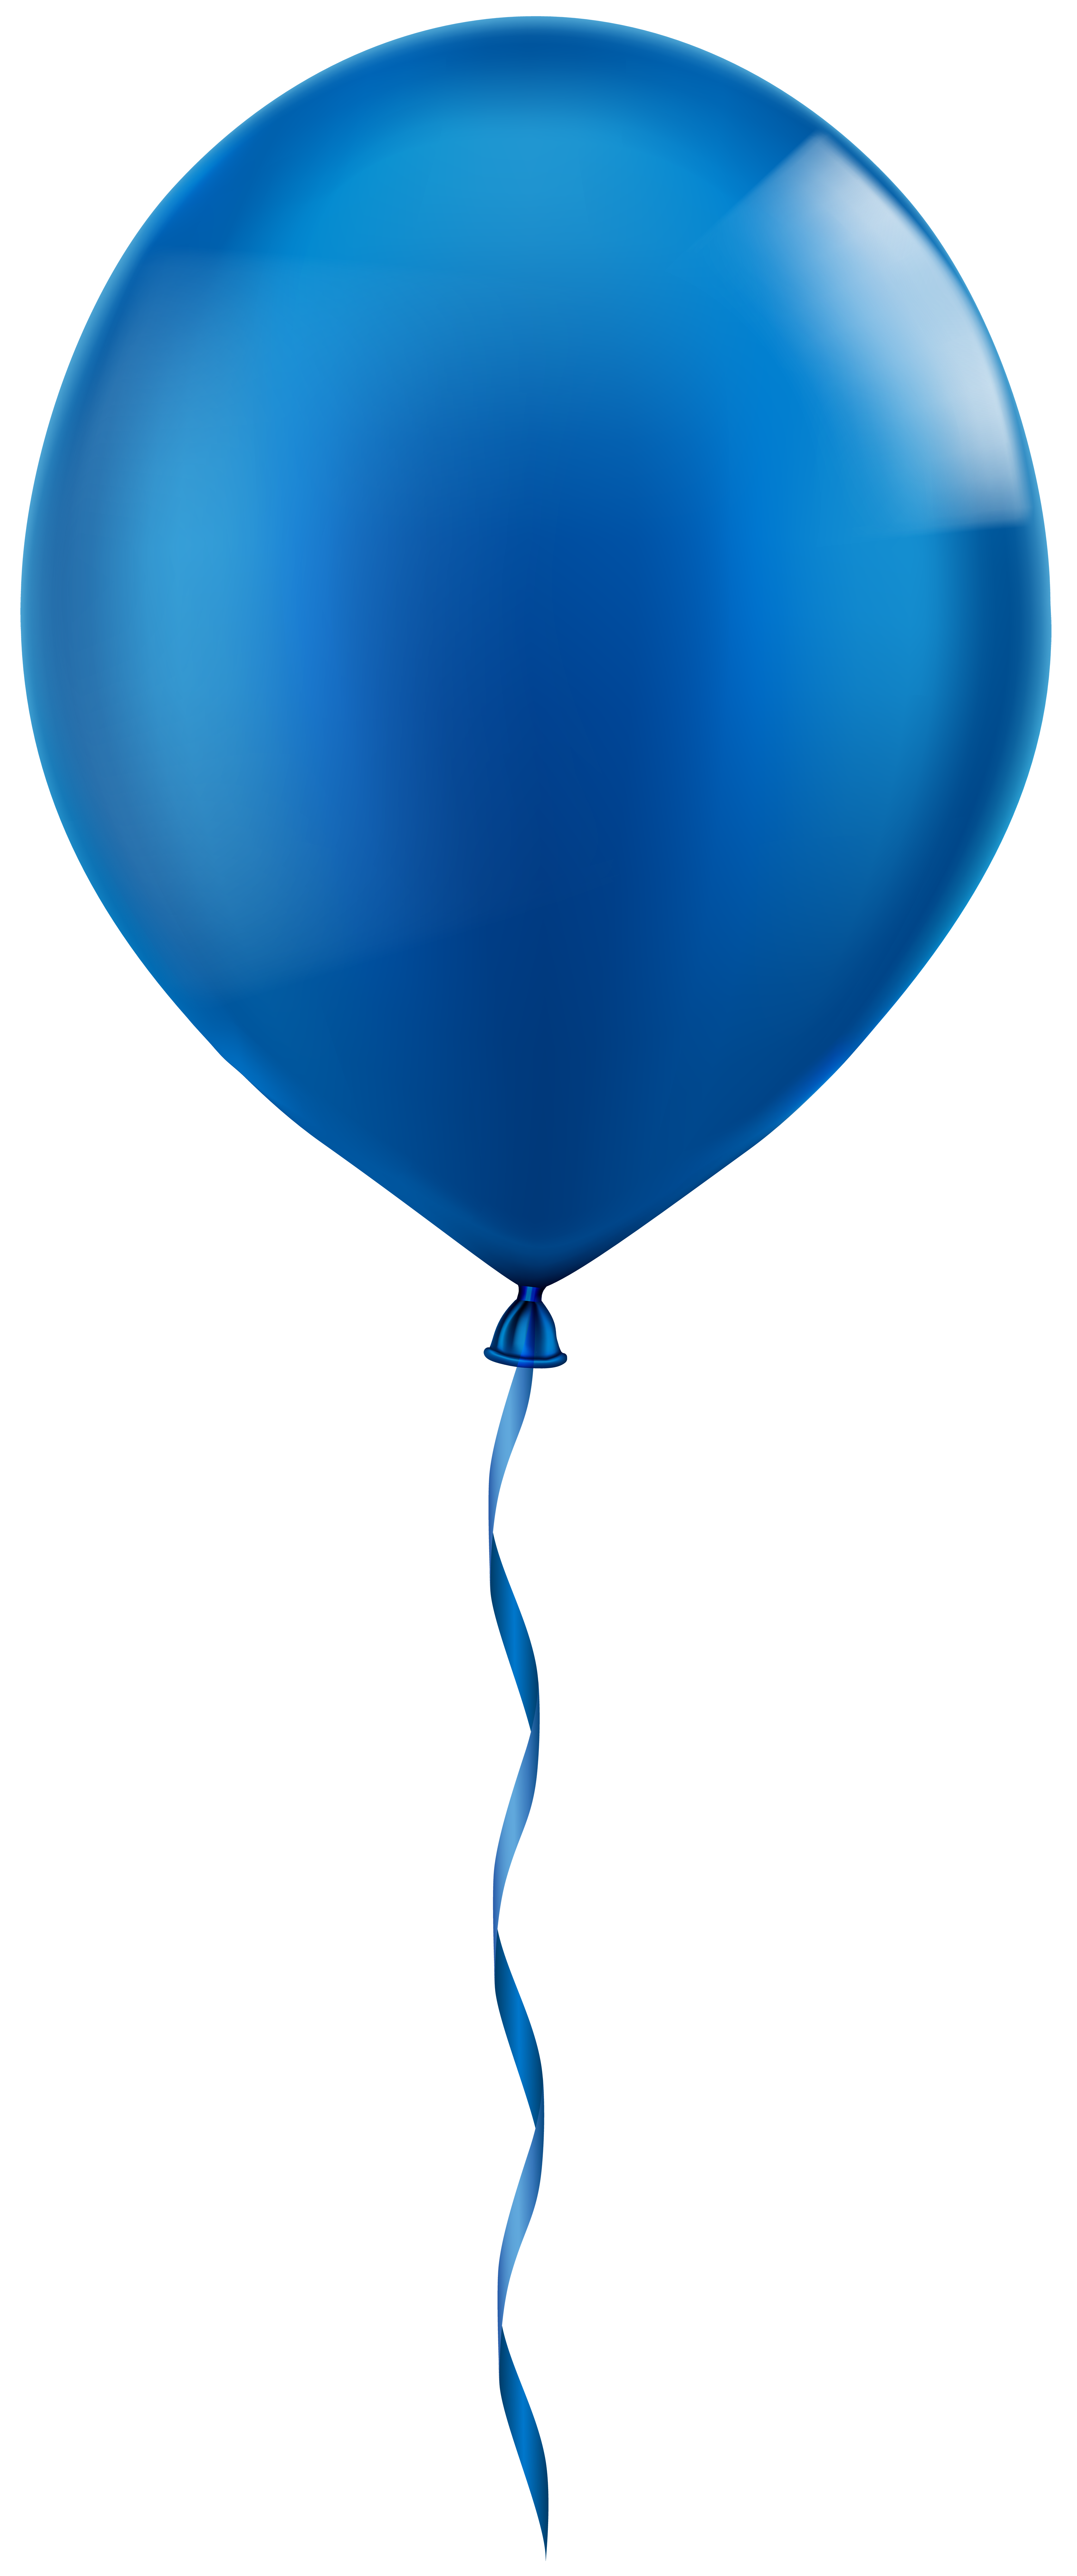 Single Blue Balloon Clip Art